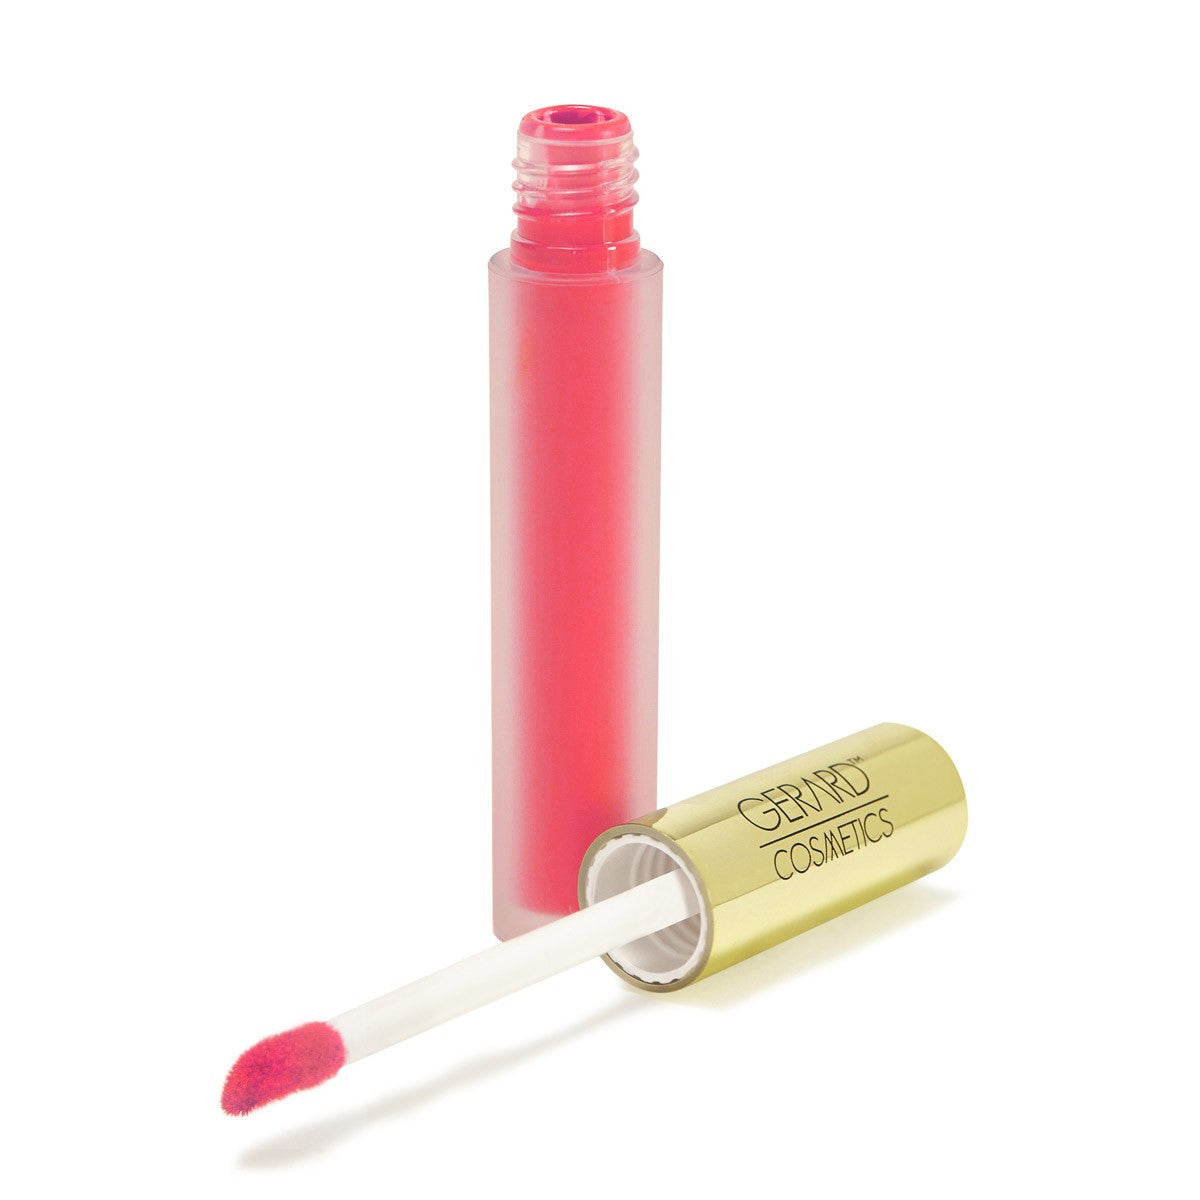 Gerard Cosmetics Hydra Matte Liquid Lipstick 'Strawberry Fields'